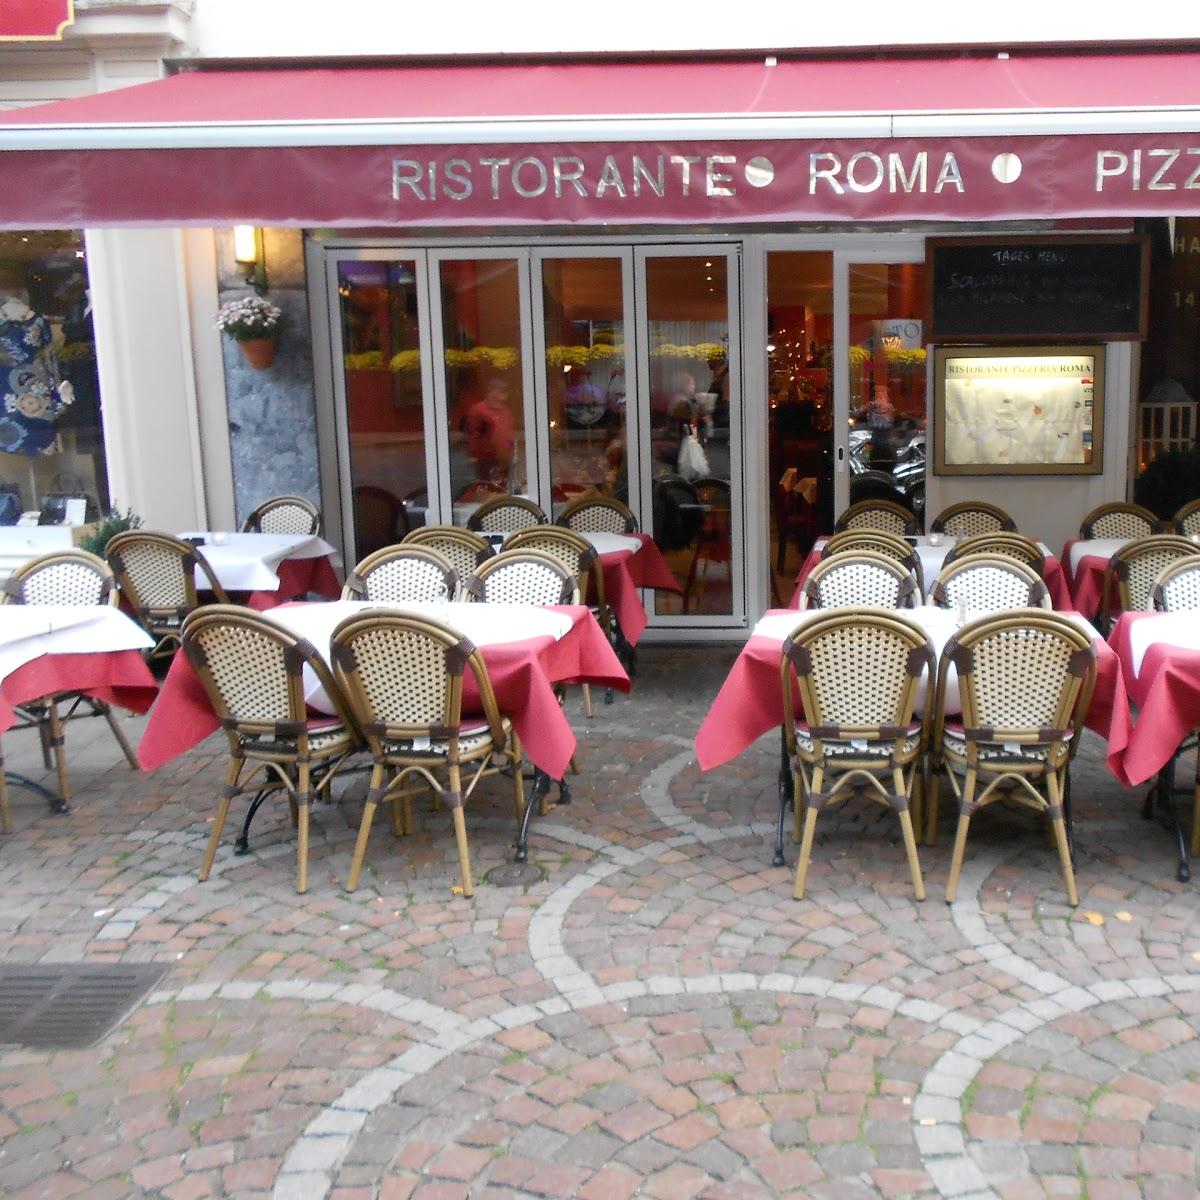 Restaurant "Roma" in Baden-Baden